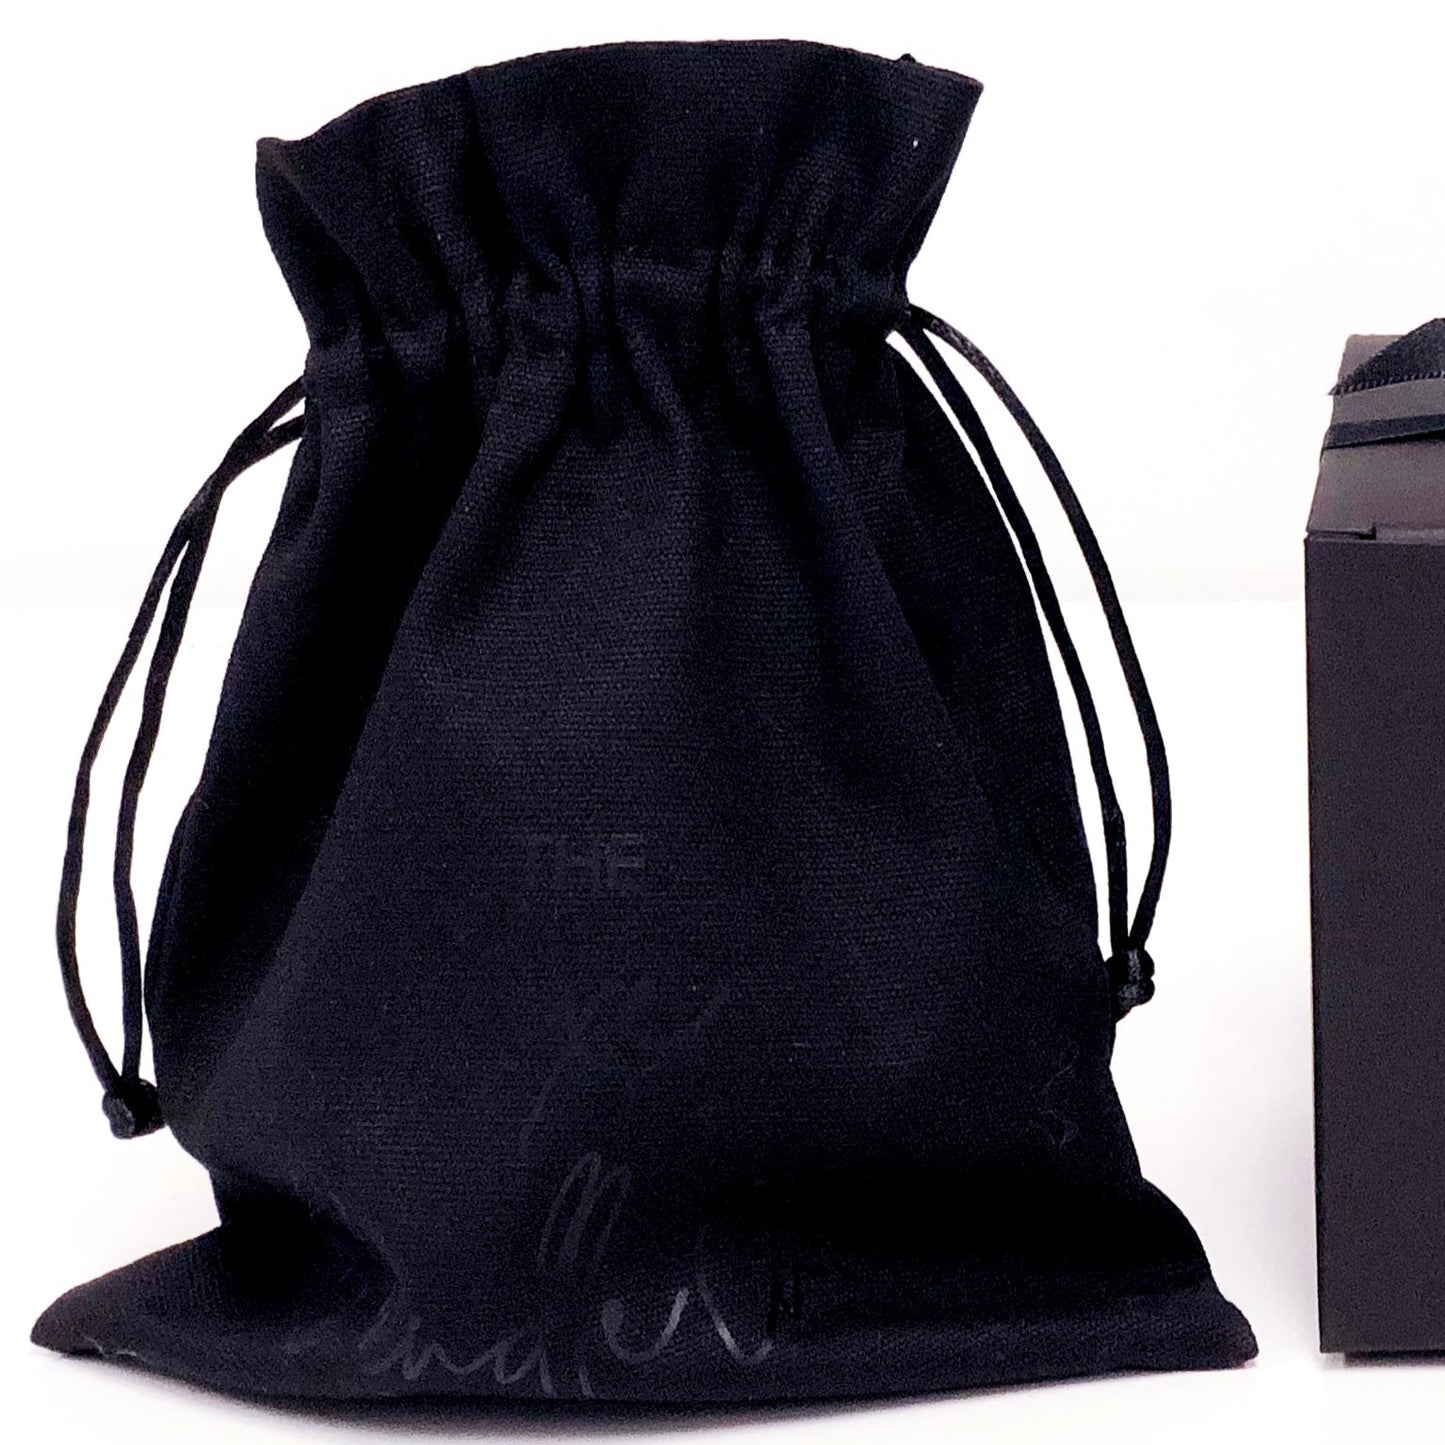 Candle Accessory - Black Cotton Dust Bag